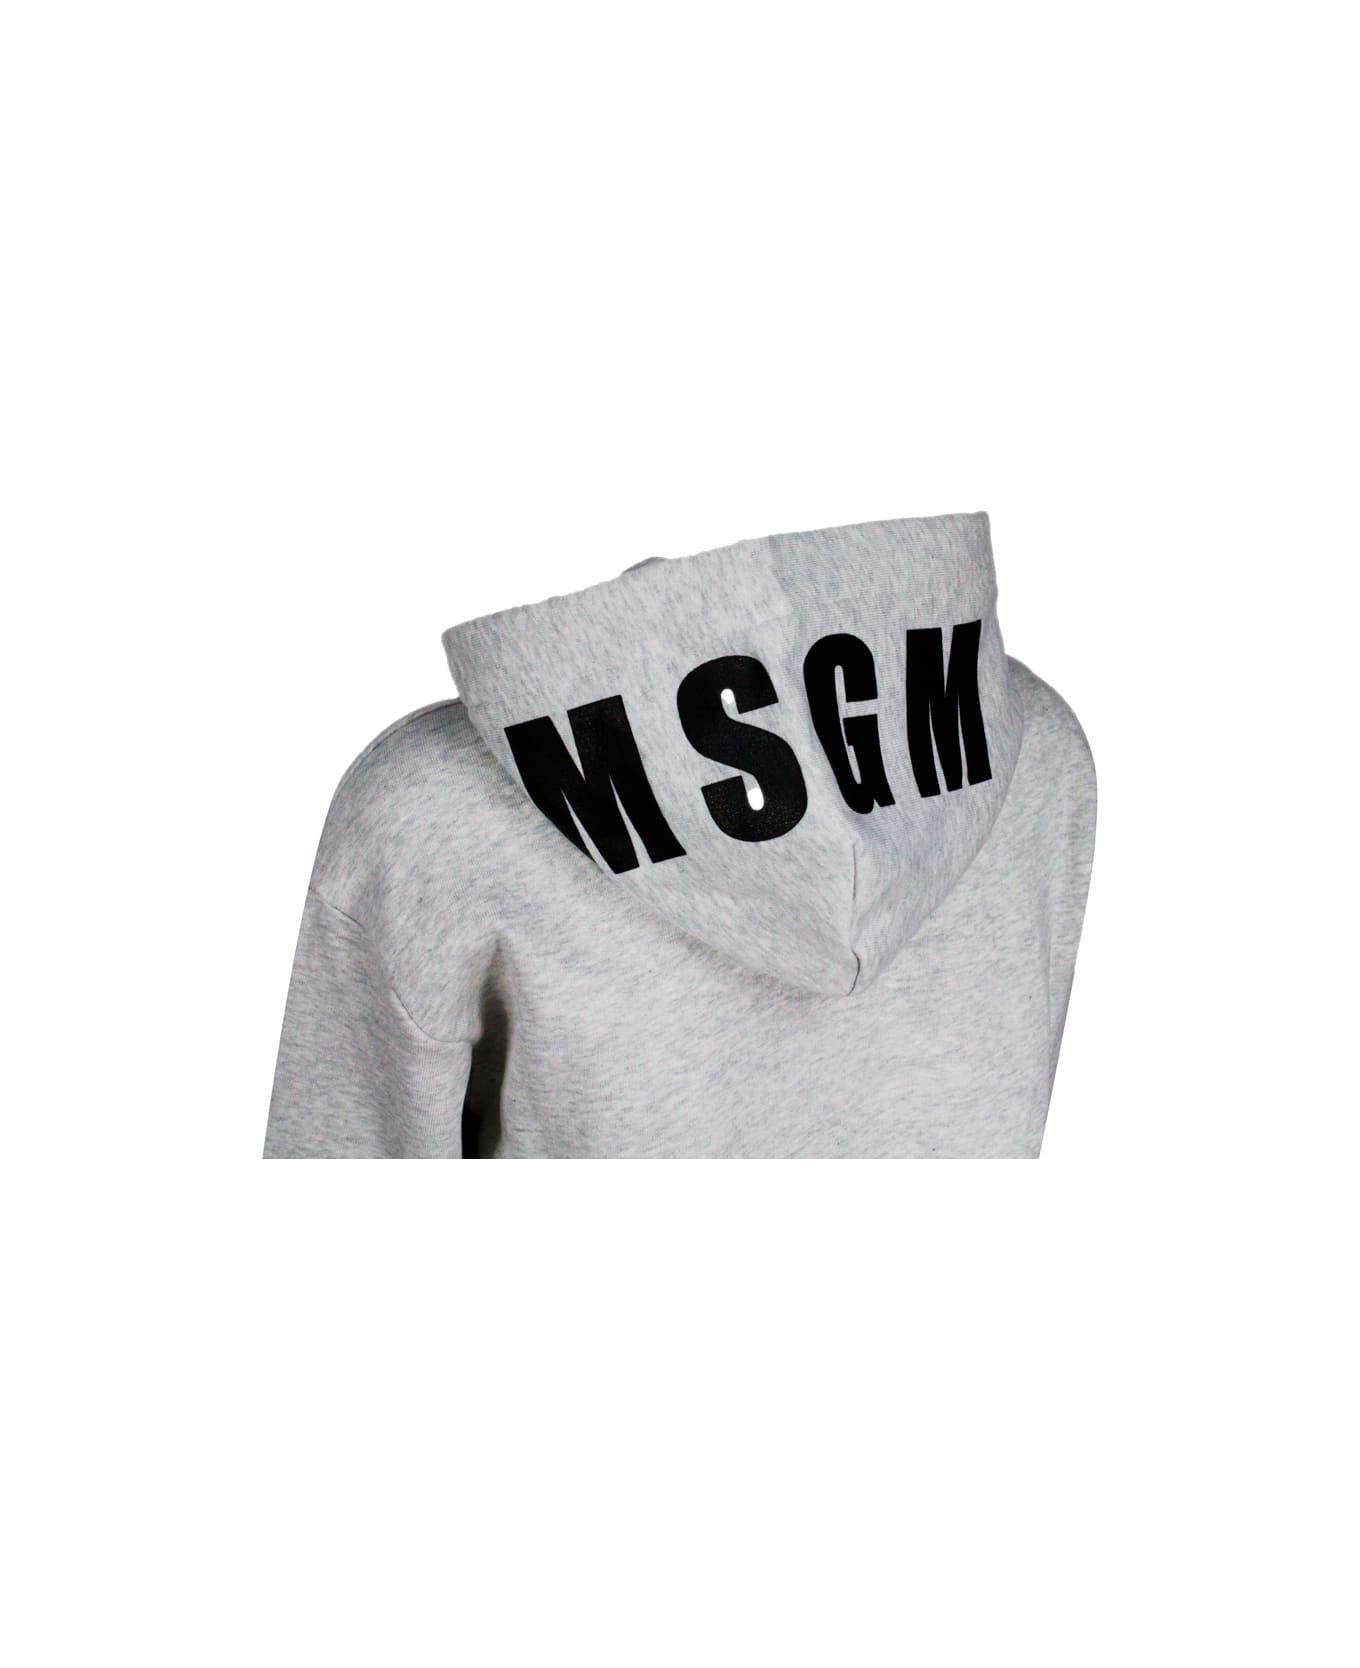 MSGM Cotton Sweatshirt With Hood With Side Pockets, Zip Closure And Writing - Grey ニットウェア＆スウェットシャツ